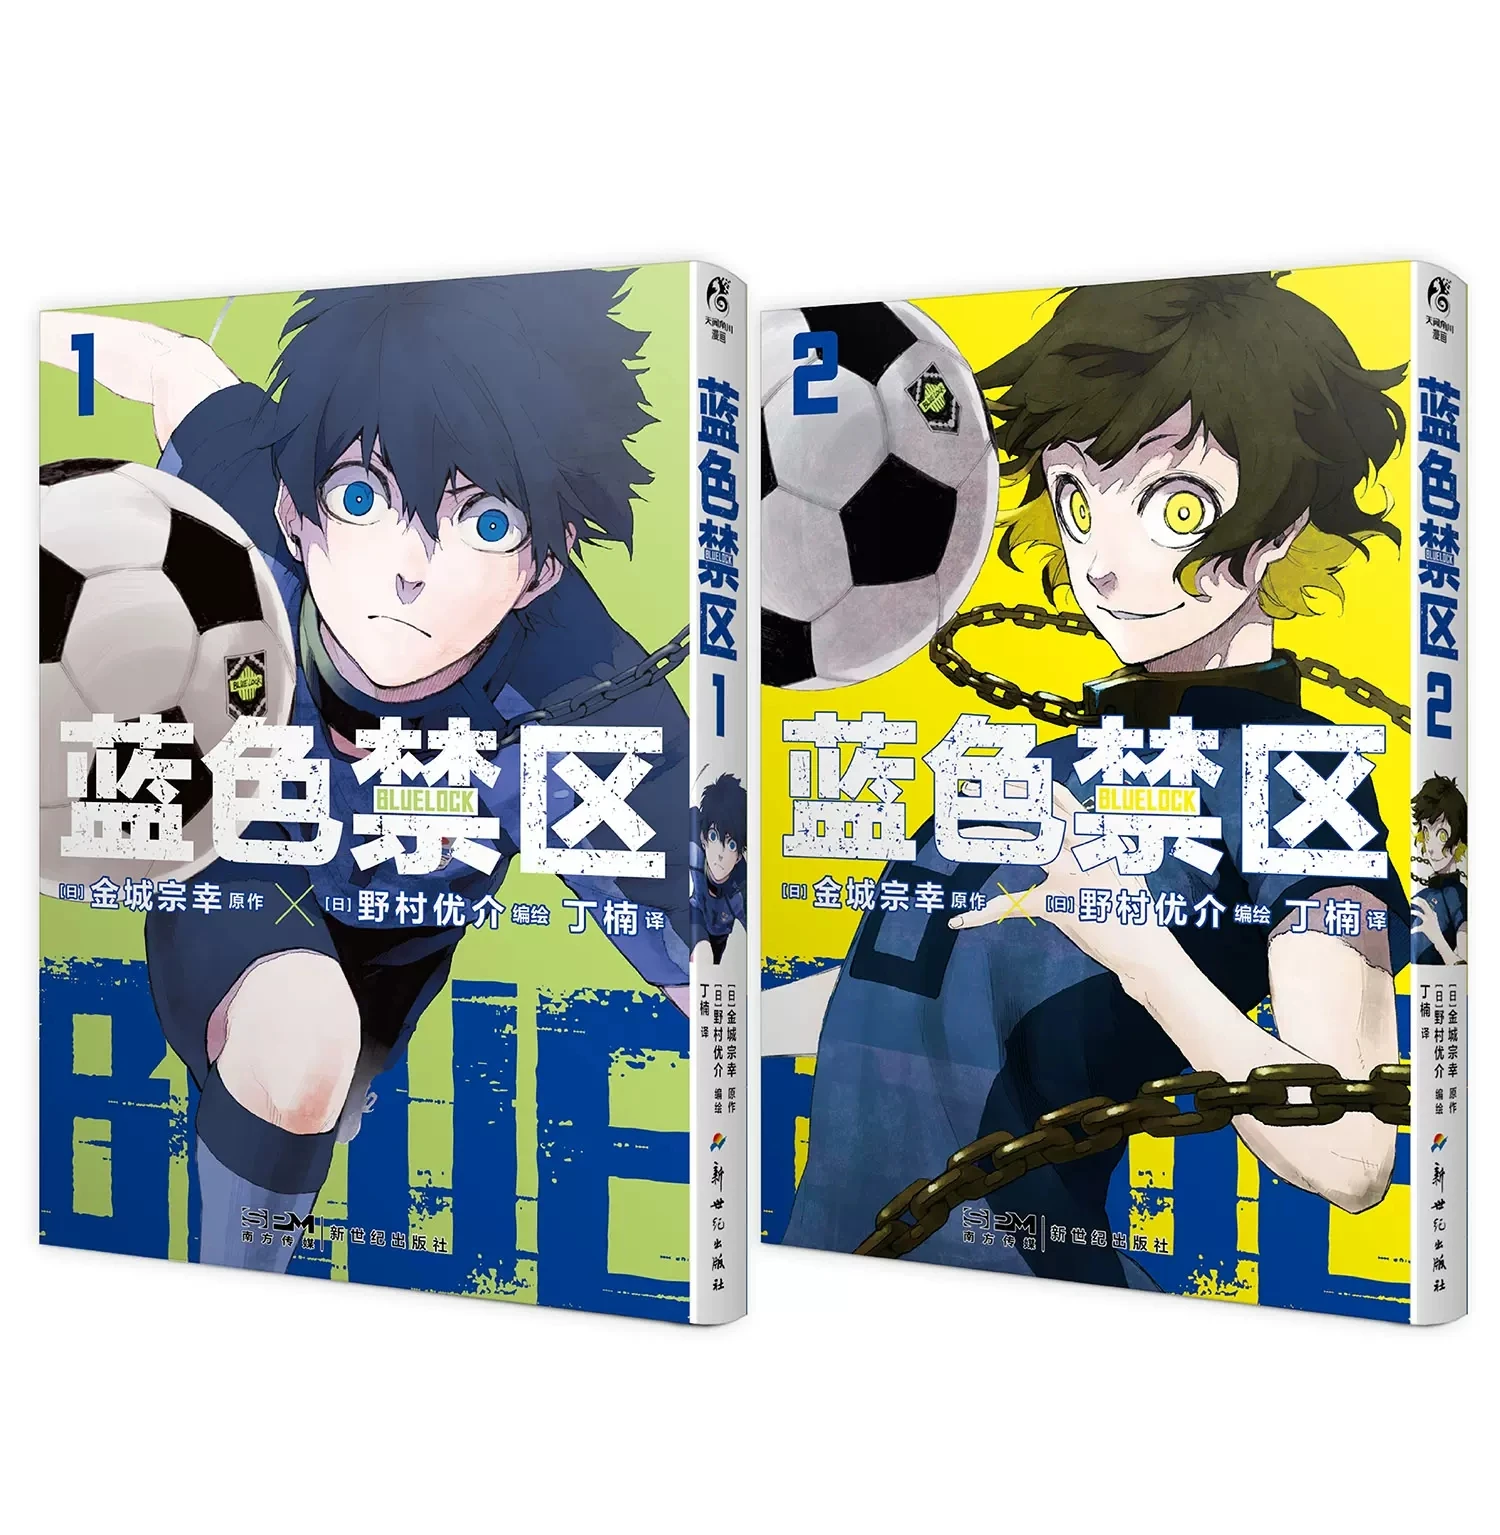 2 Books/Set Anime Blue lock Japanese Manga Book Volume 1-2 Football Youth  Hot Blood Art Comic Books - AliExpress